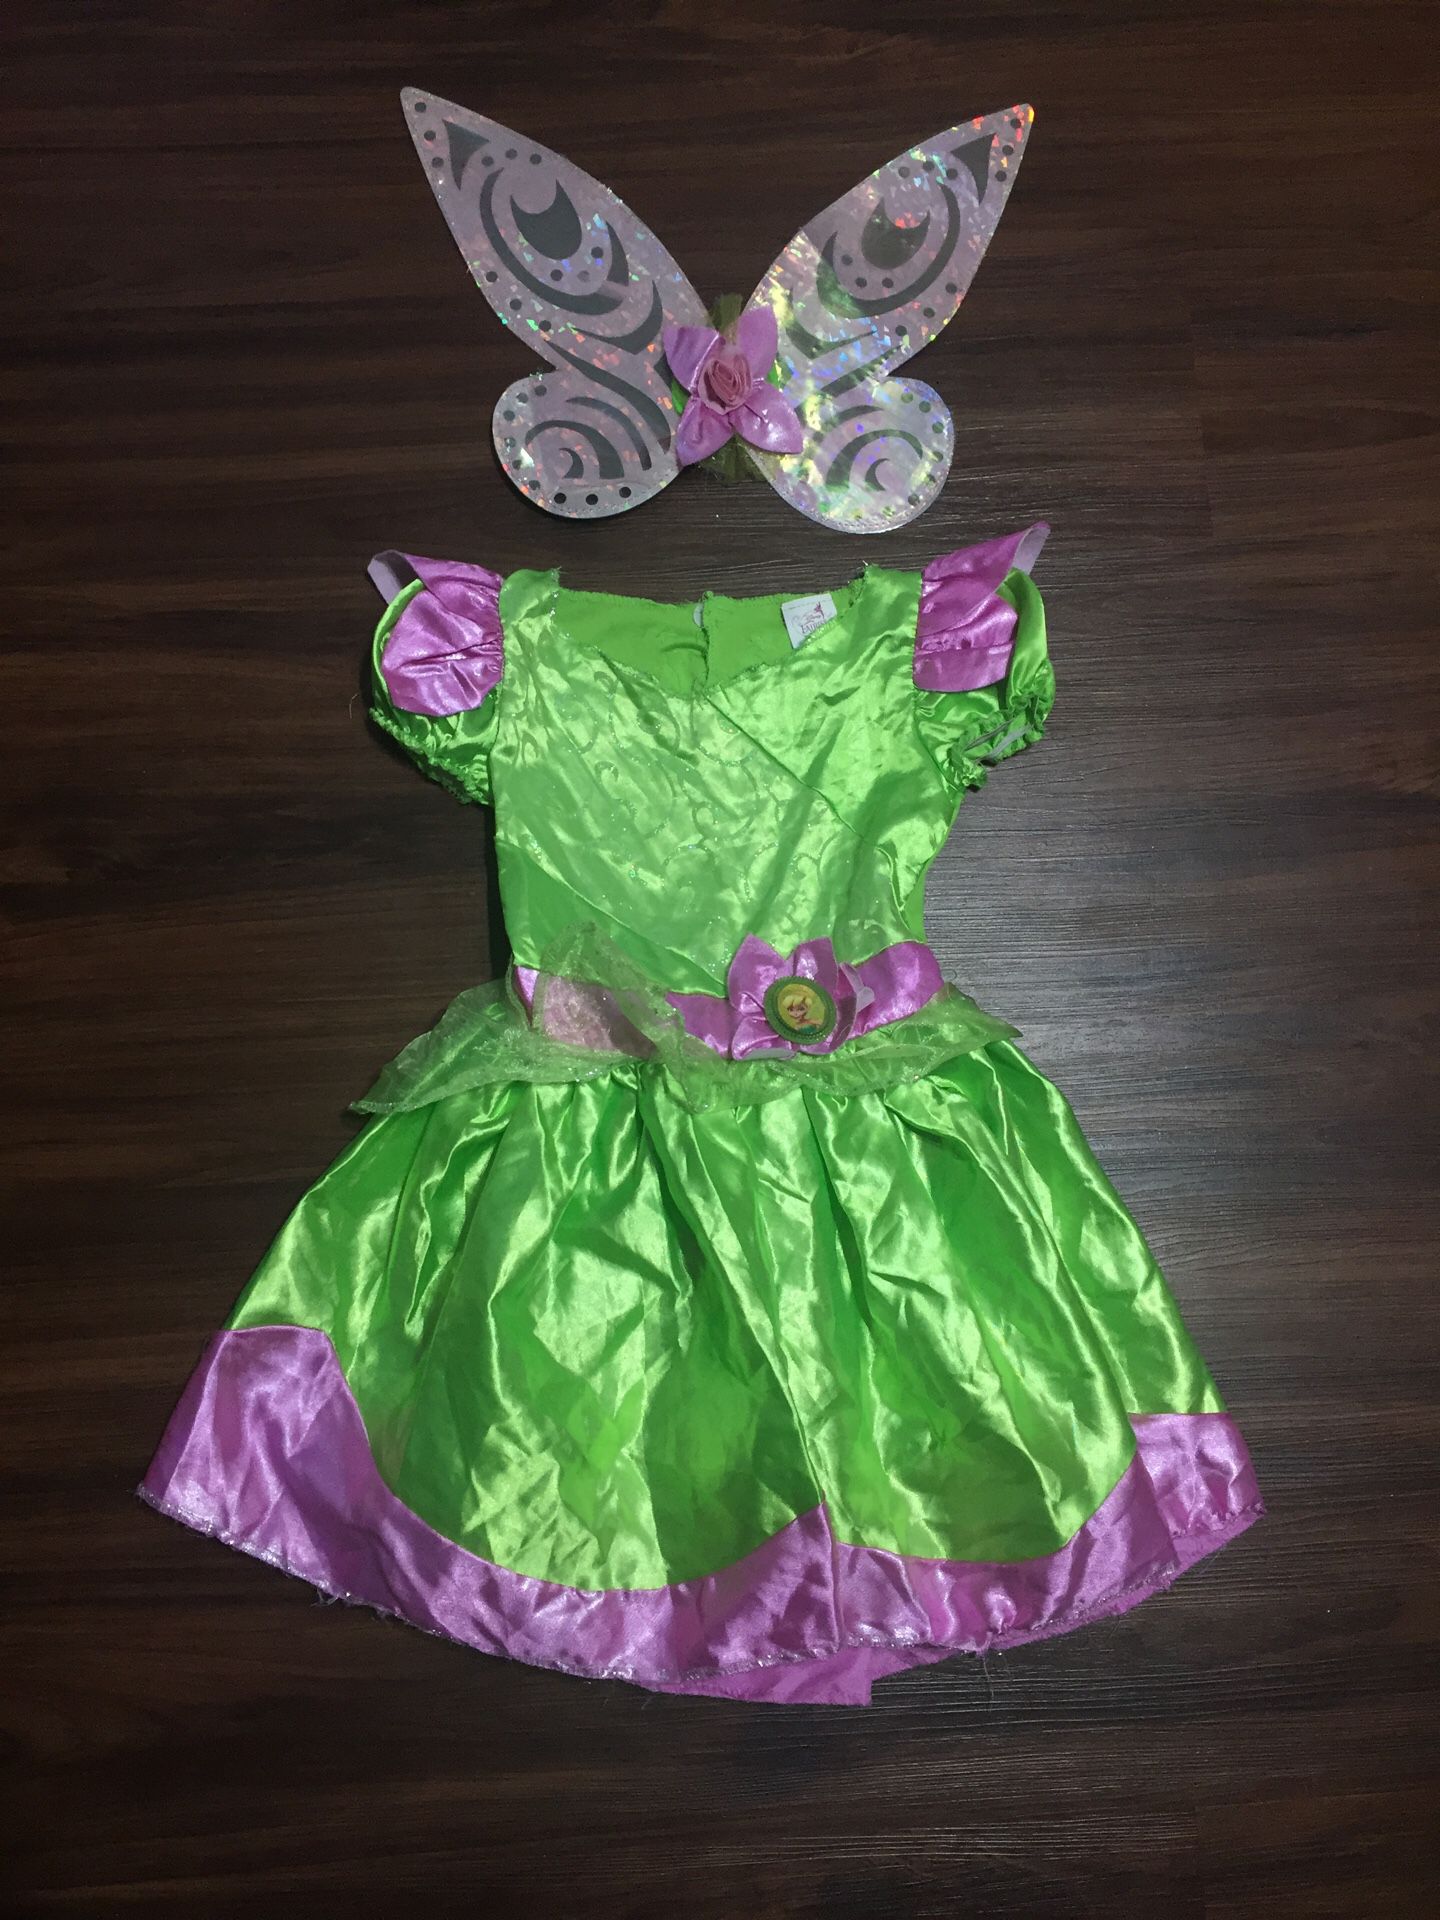 Child’s Tinkerbell costume